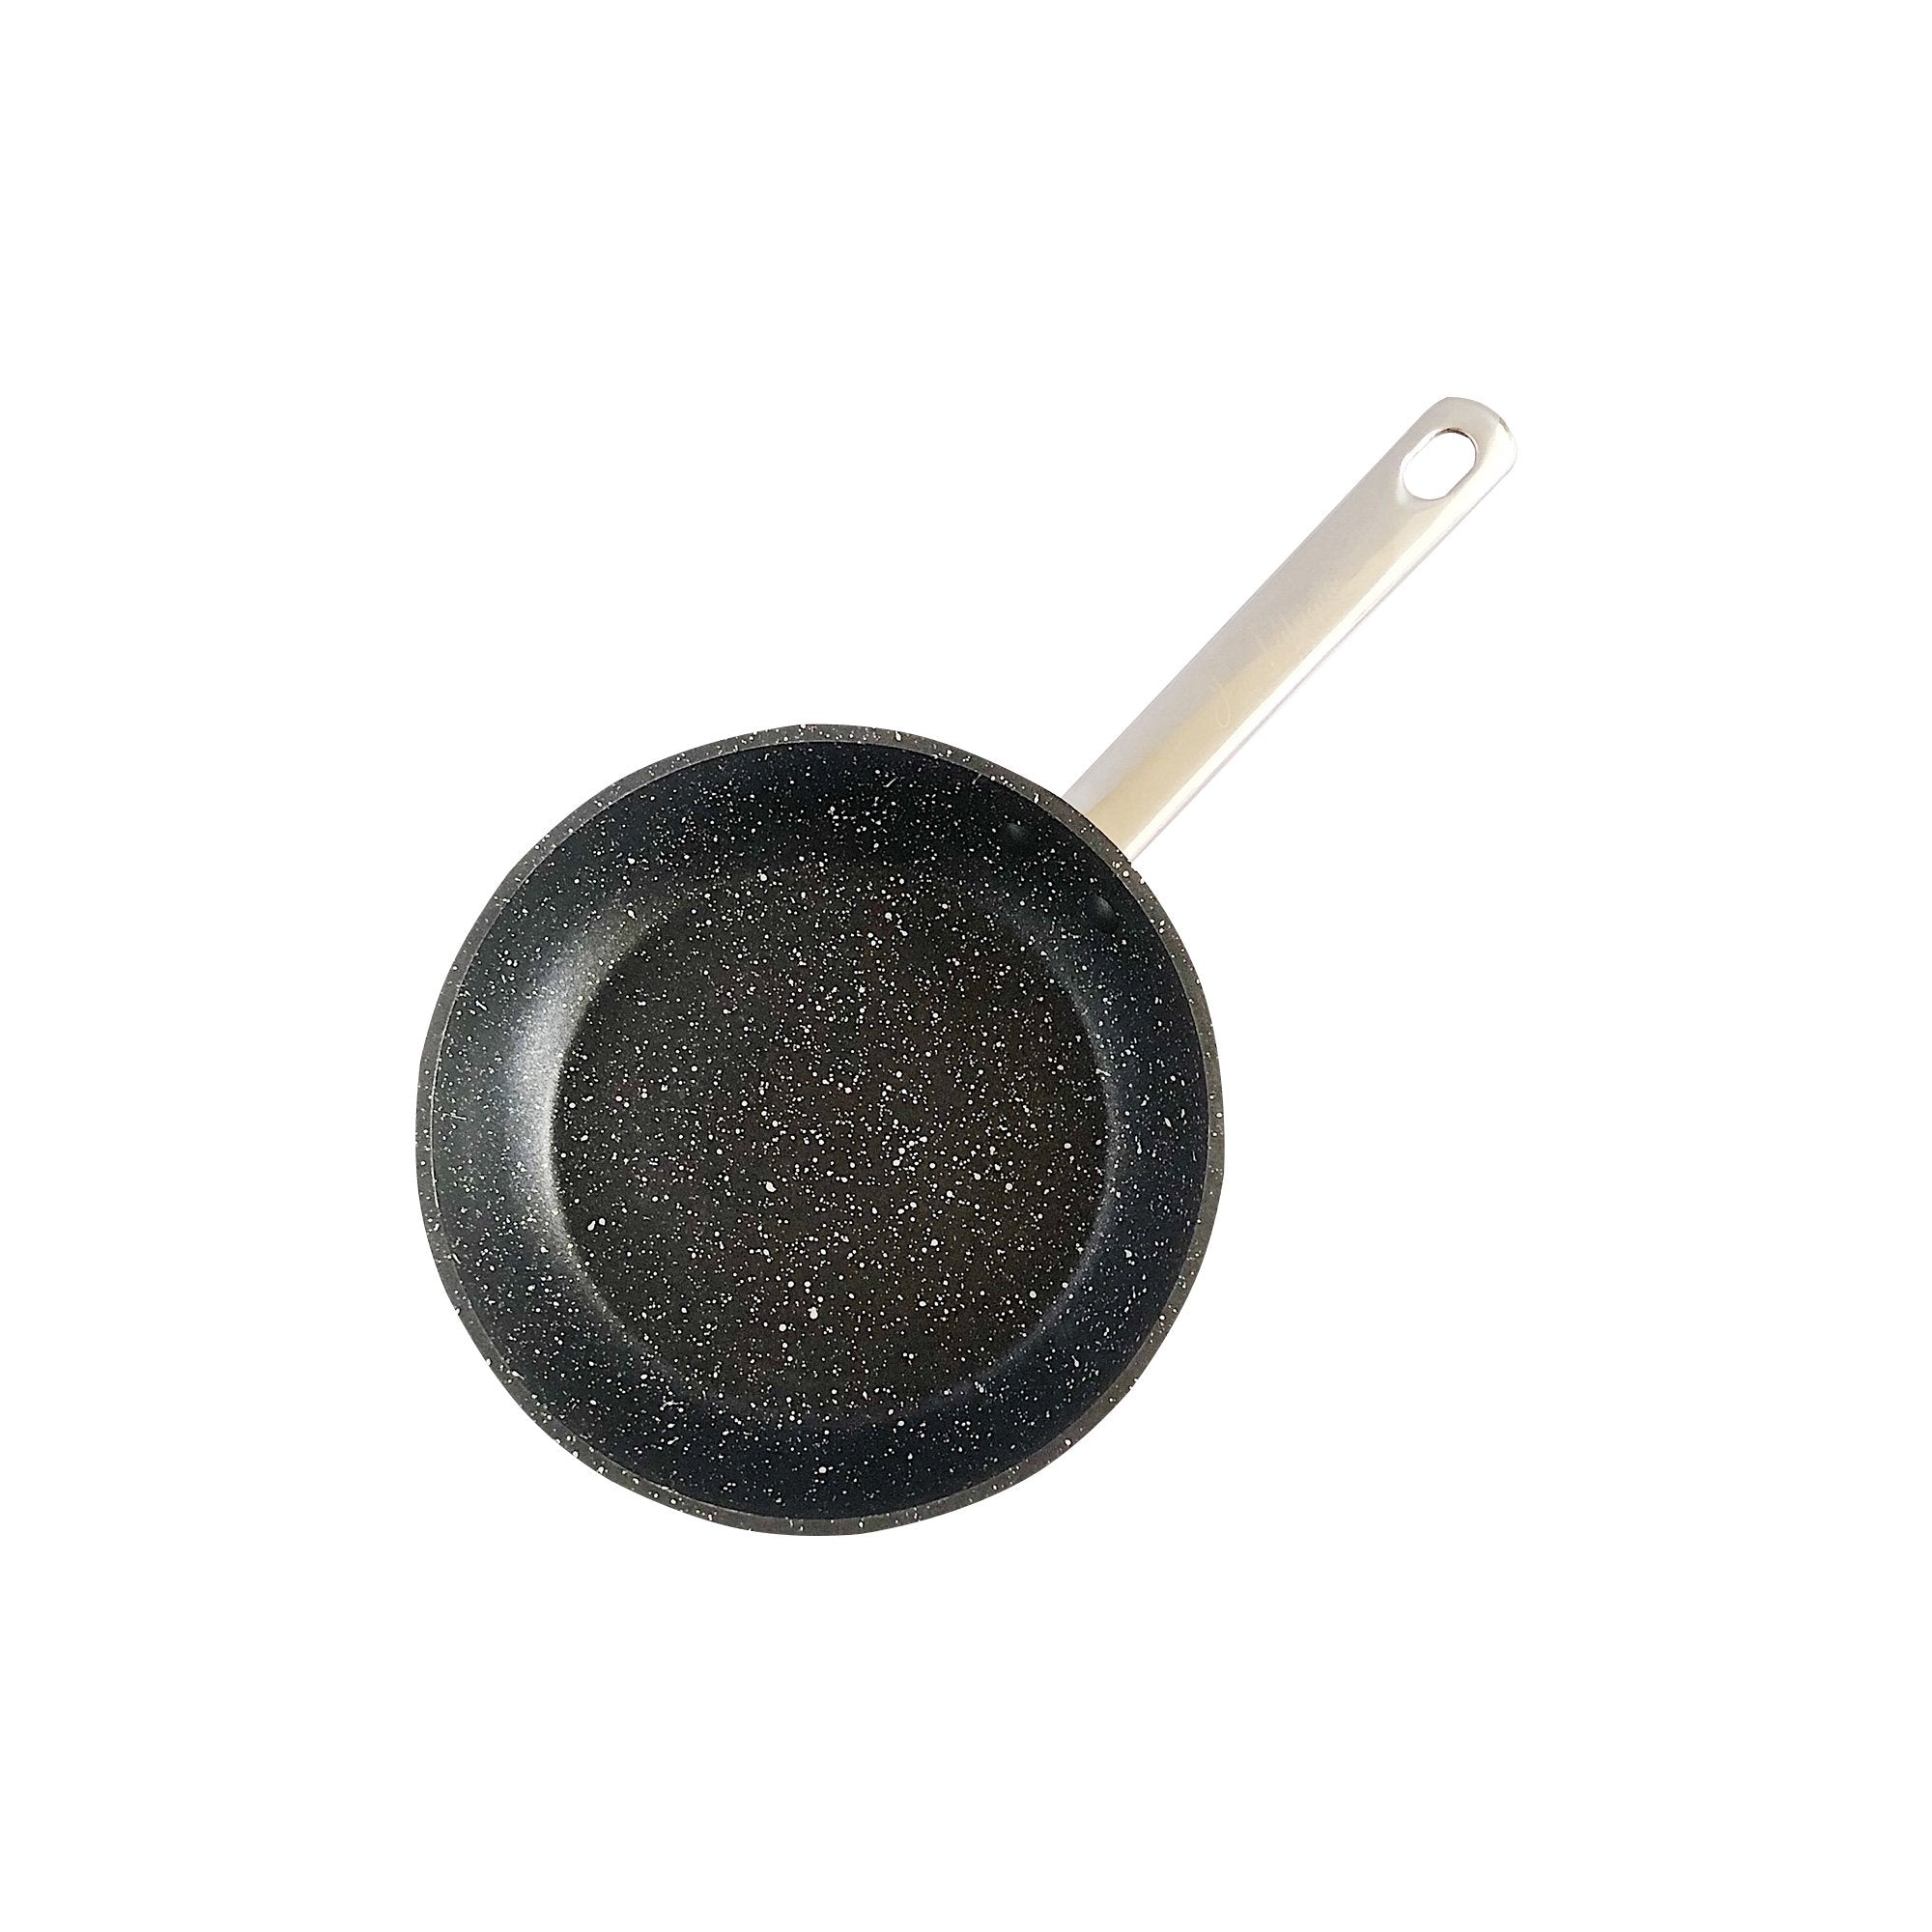 Stonetastic Granite Non-Stick Frying Pans - Set of 3